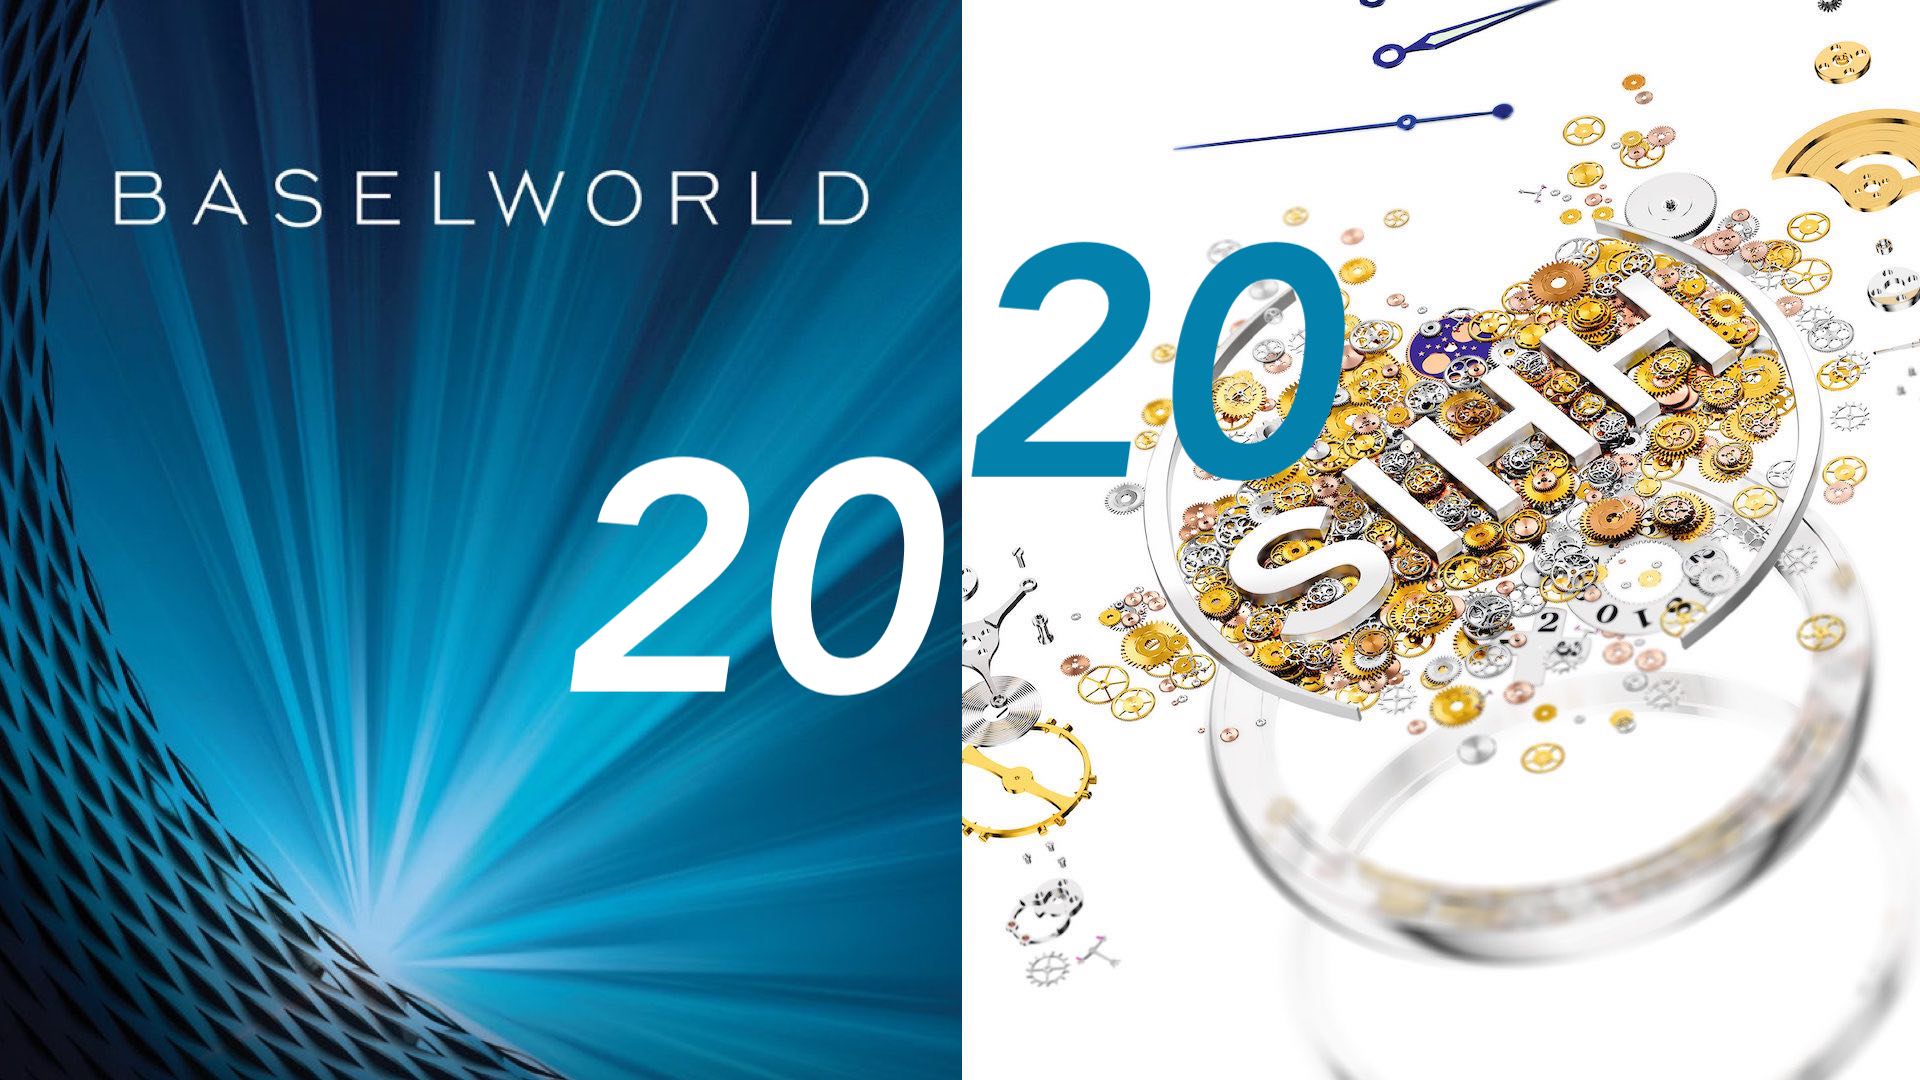 BaselWorld 2020 SIHH 2020 unite aBlogtoWatch featured